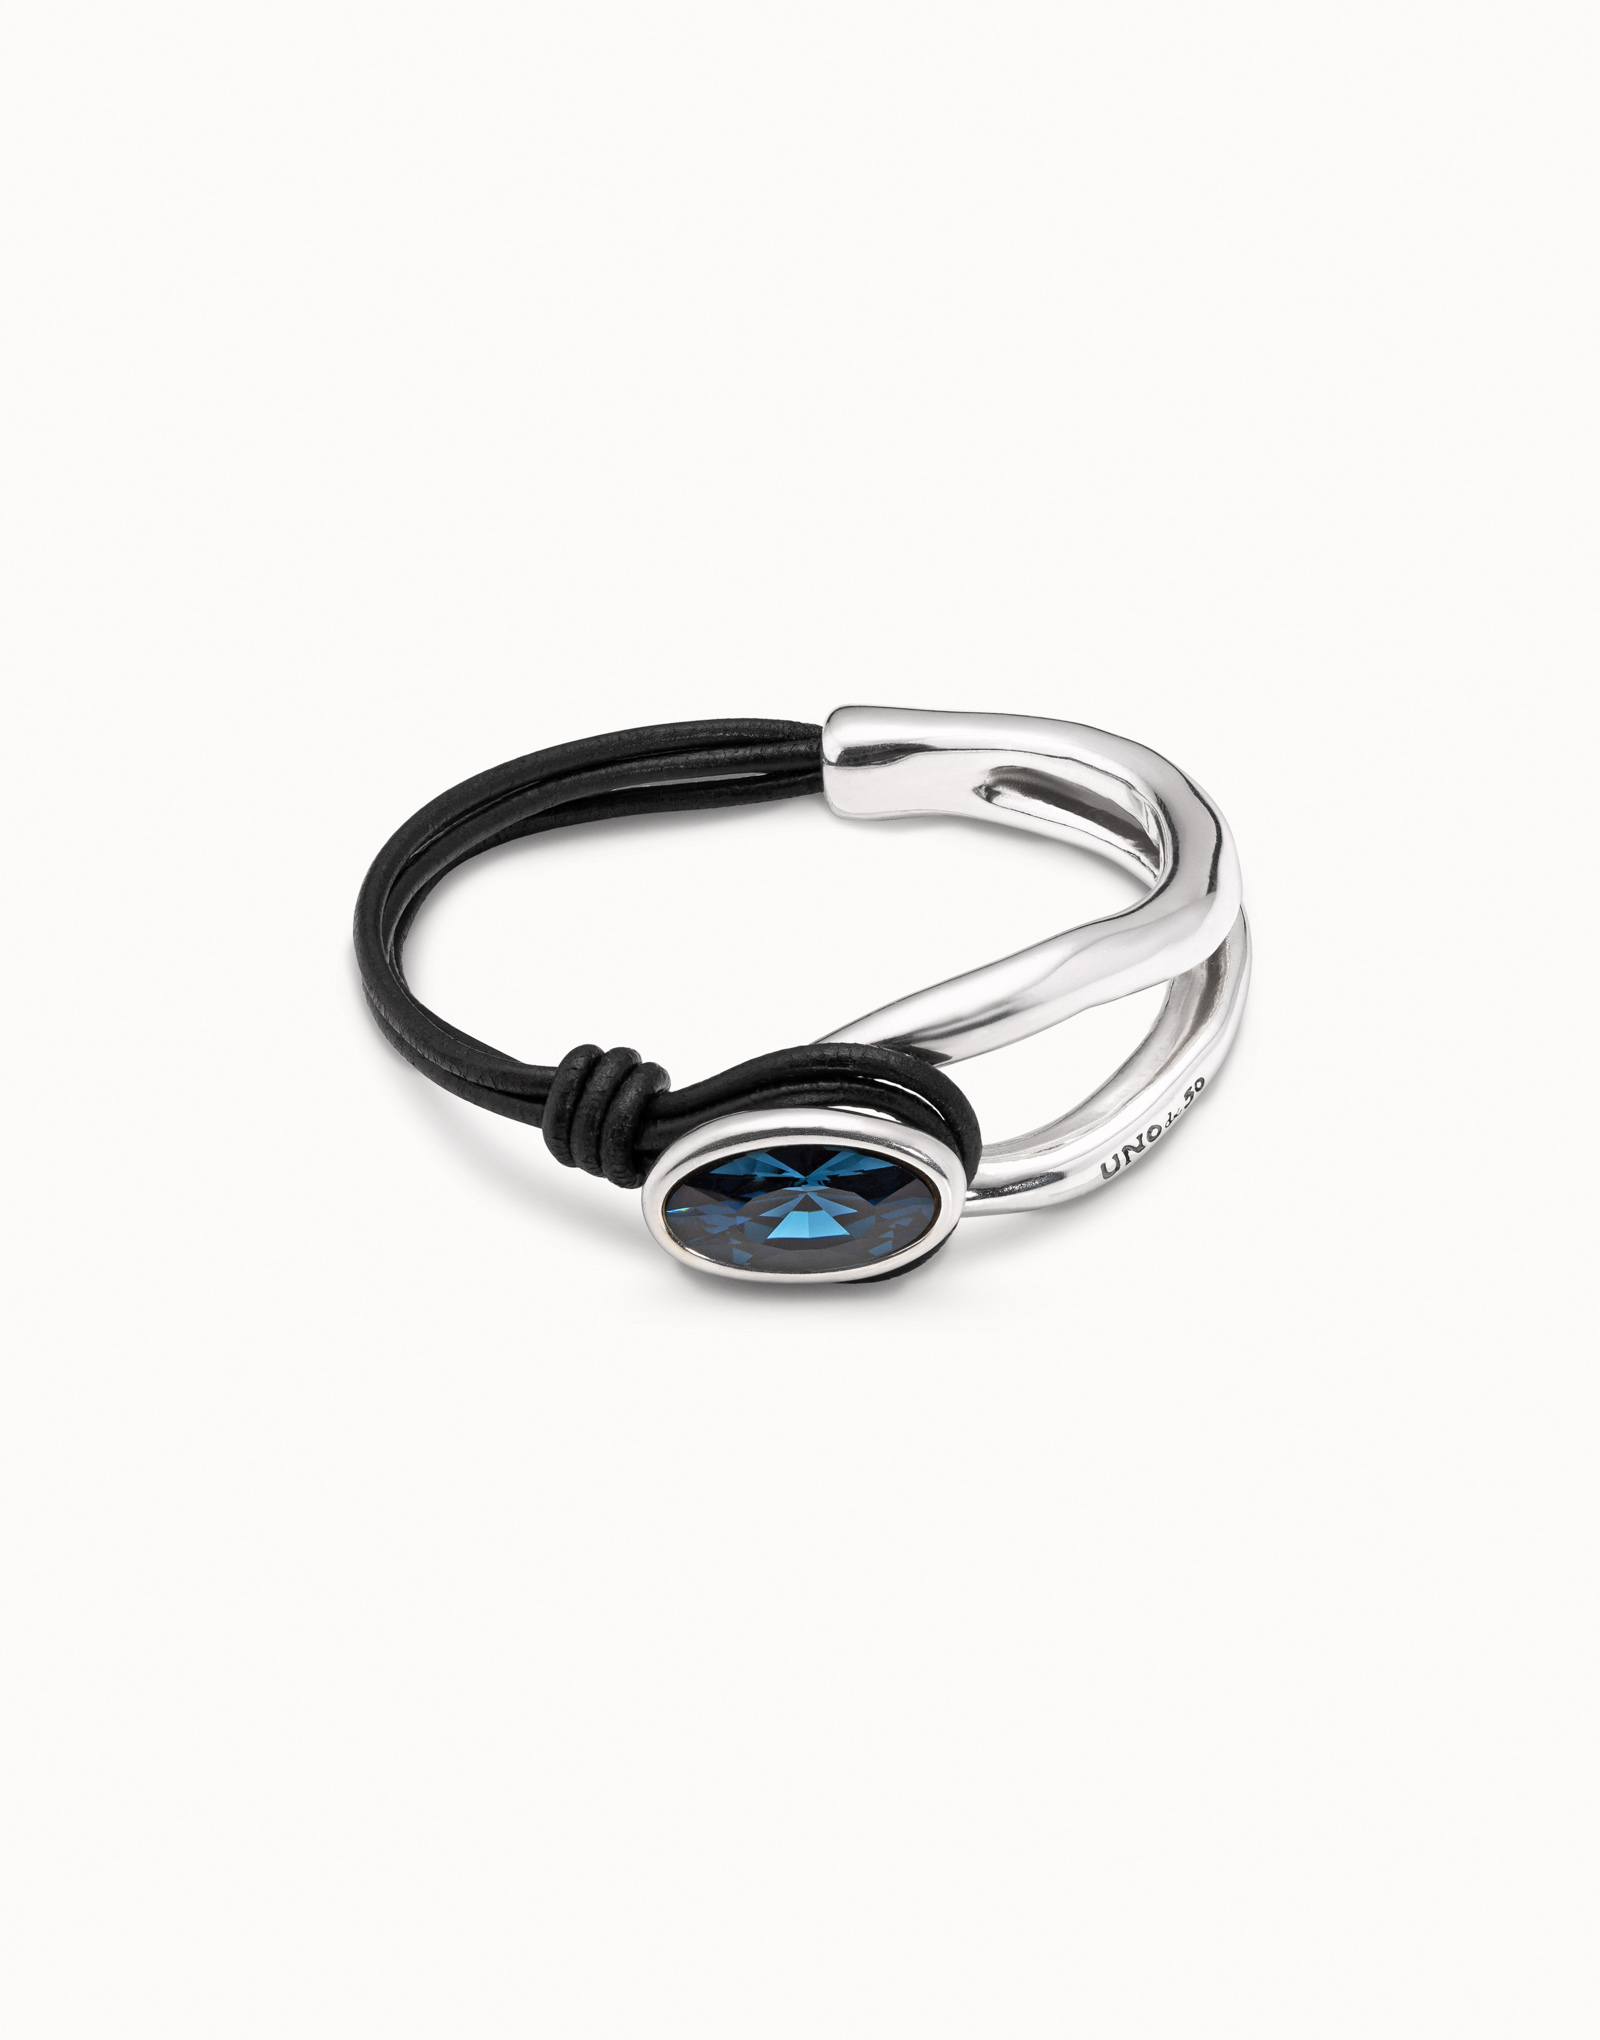 Bangle cable bracelet by vangovango - Chain bracelets , ID wrist - Afrikrea